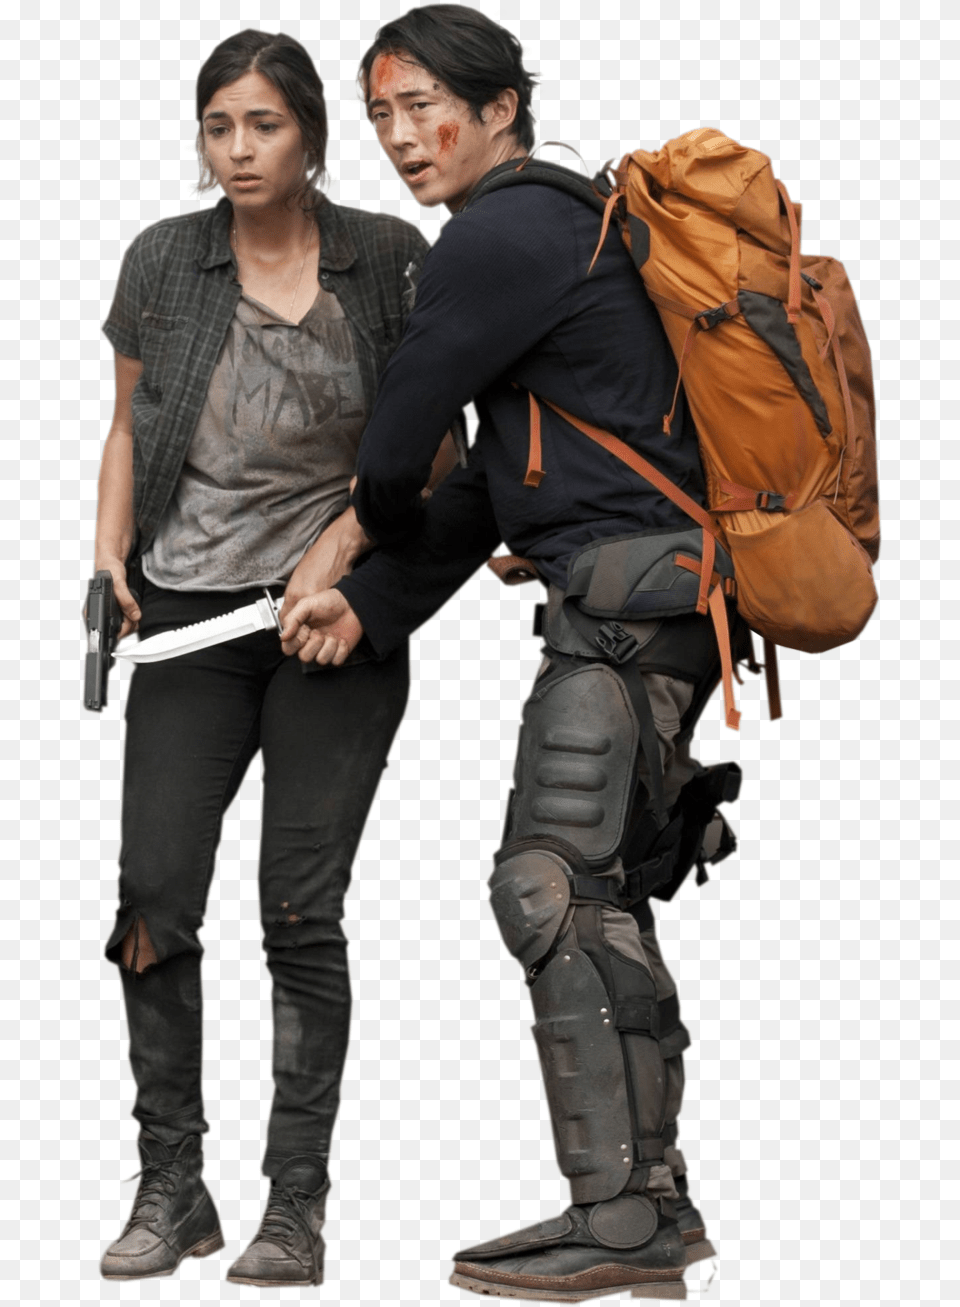 Walking Dead Tara And Glenn, Bag, Adult, Person, Man Png Image